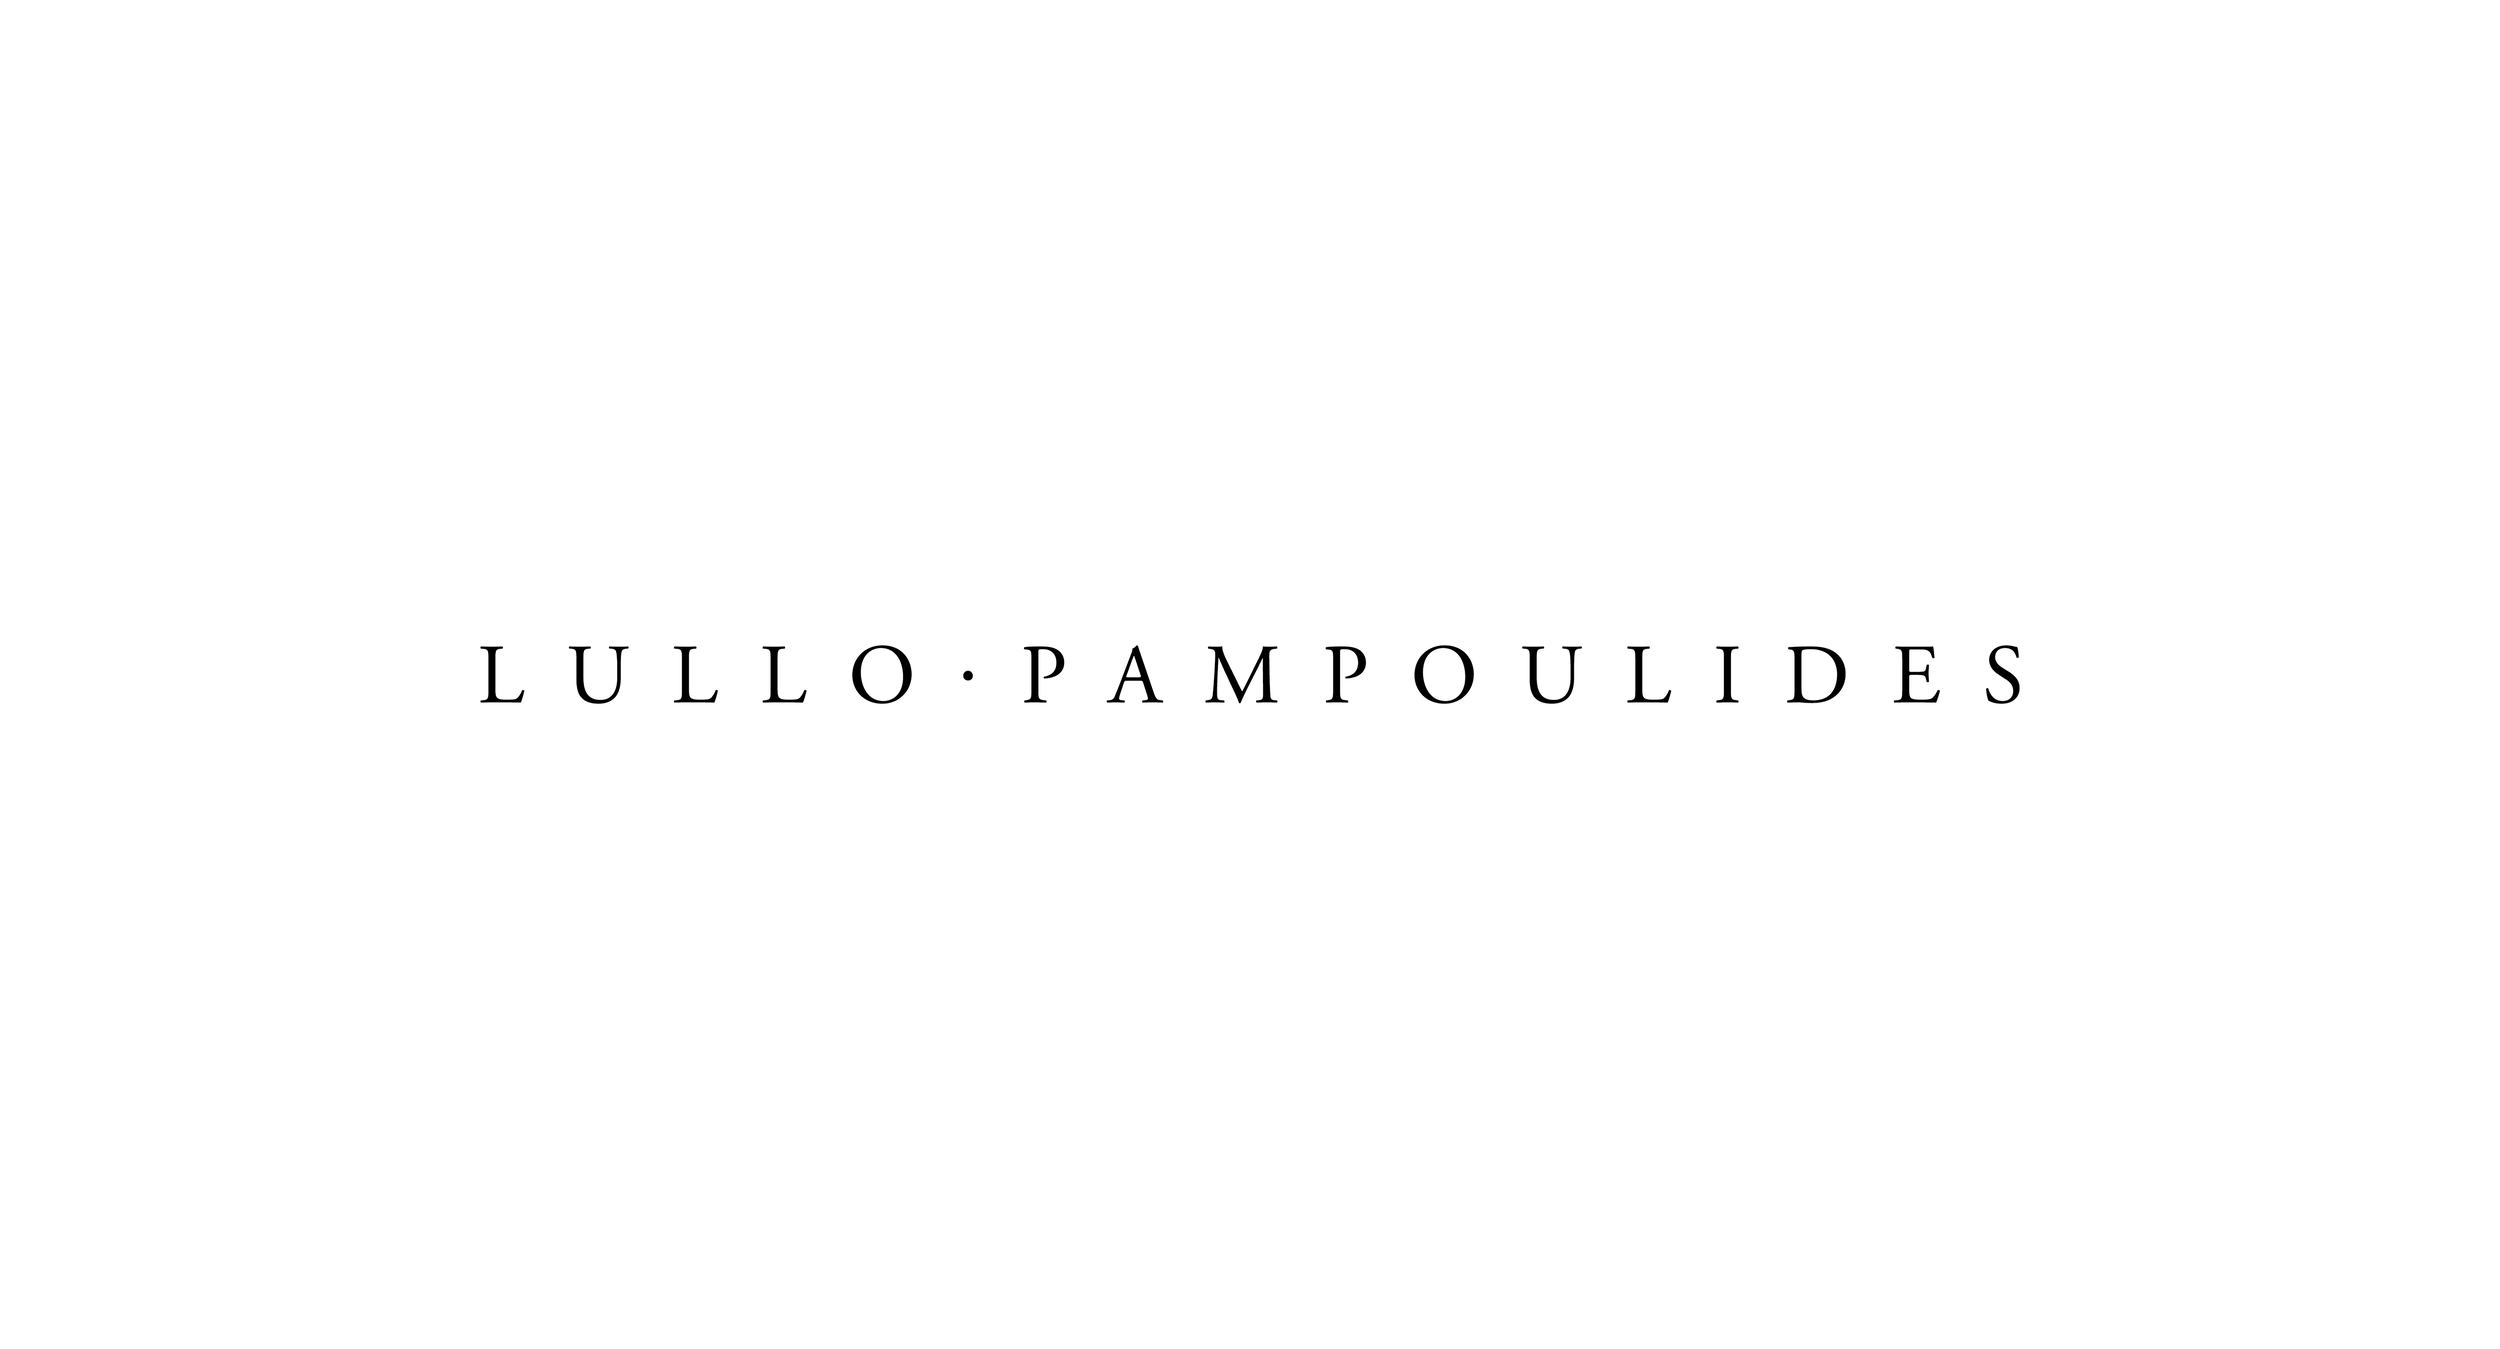 lullo · pampoulides logo